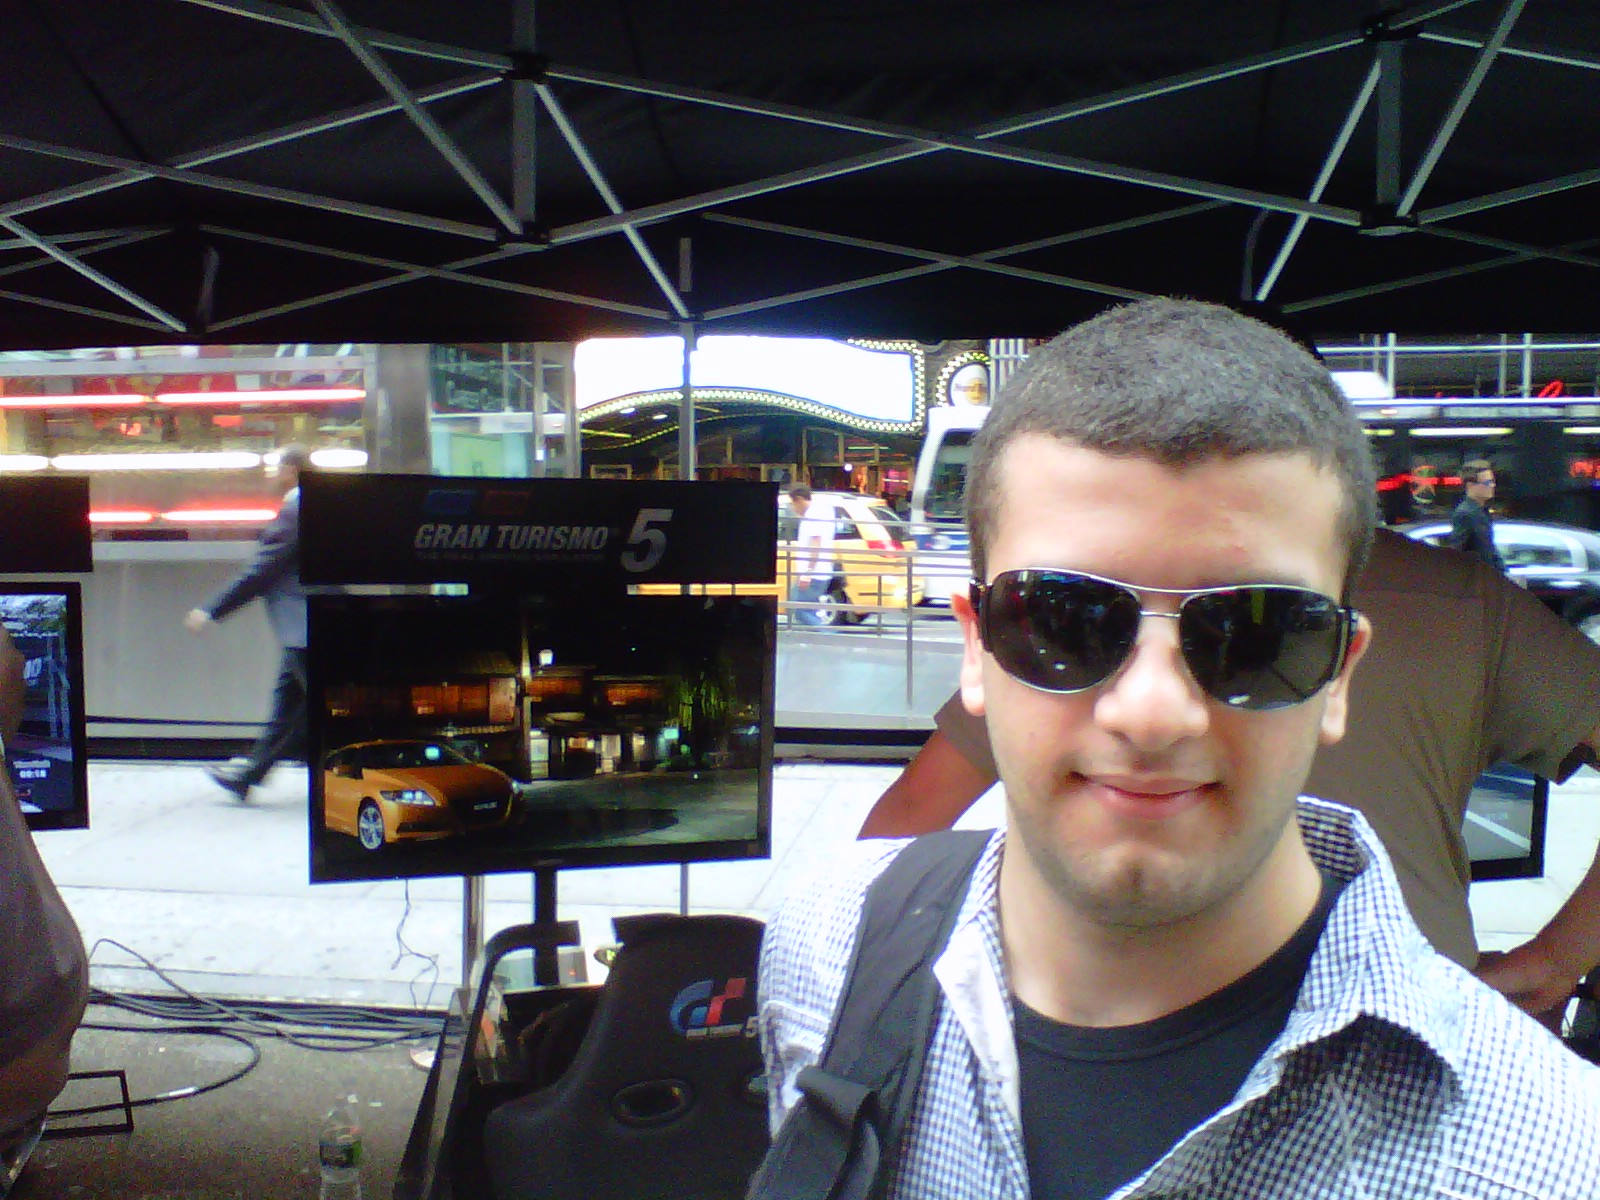  New York Times Square de Gran Turismo 5 i oynadım (SS li)